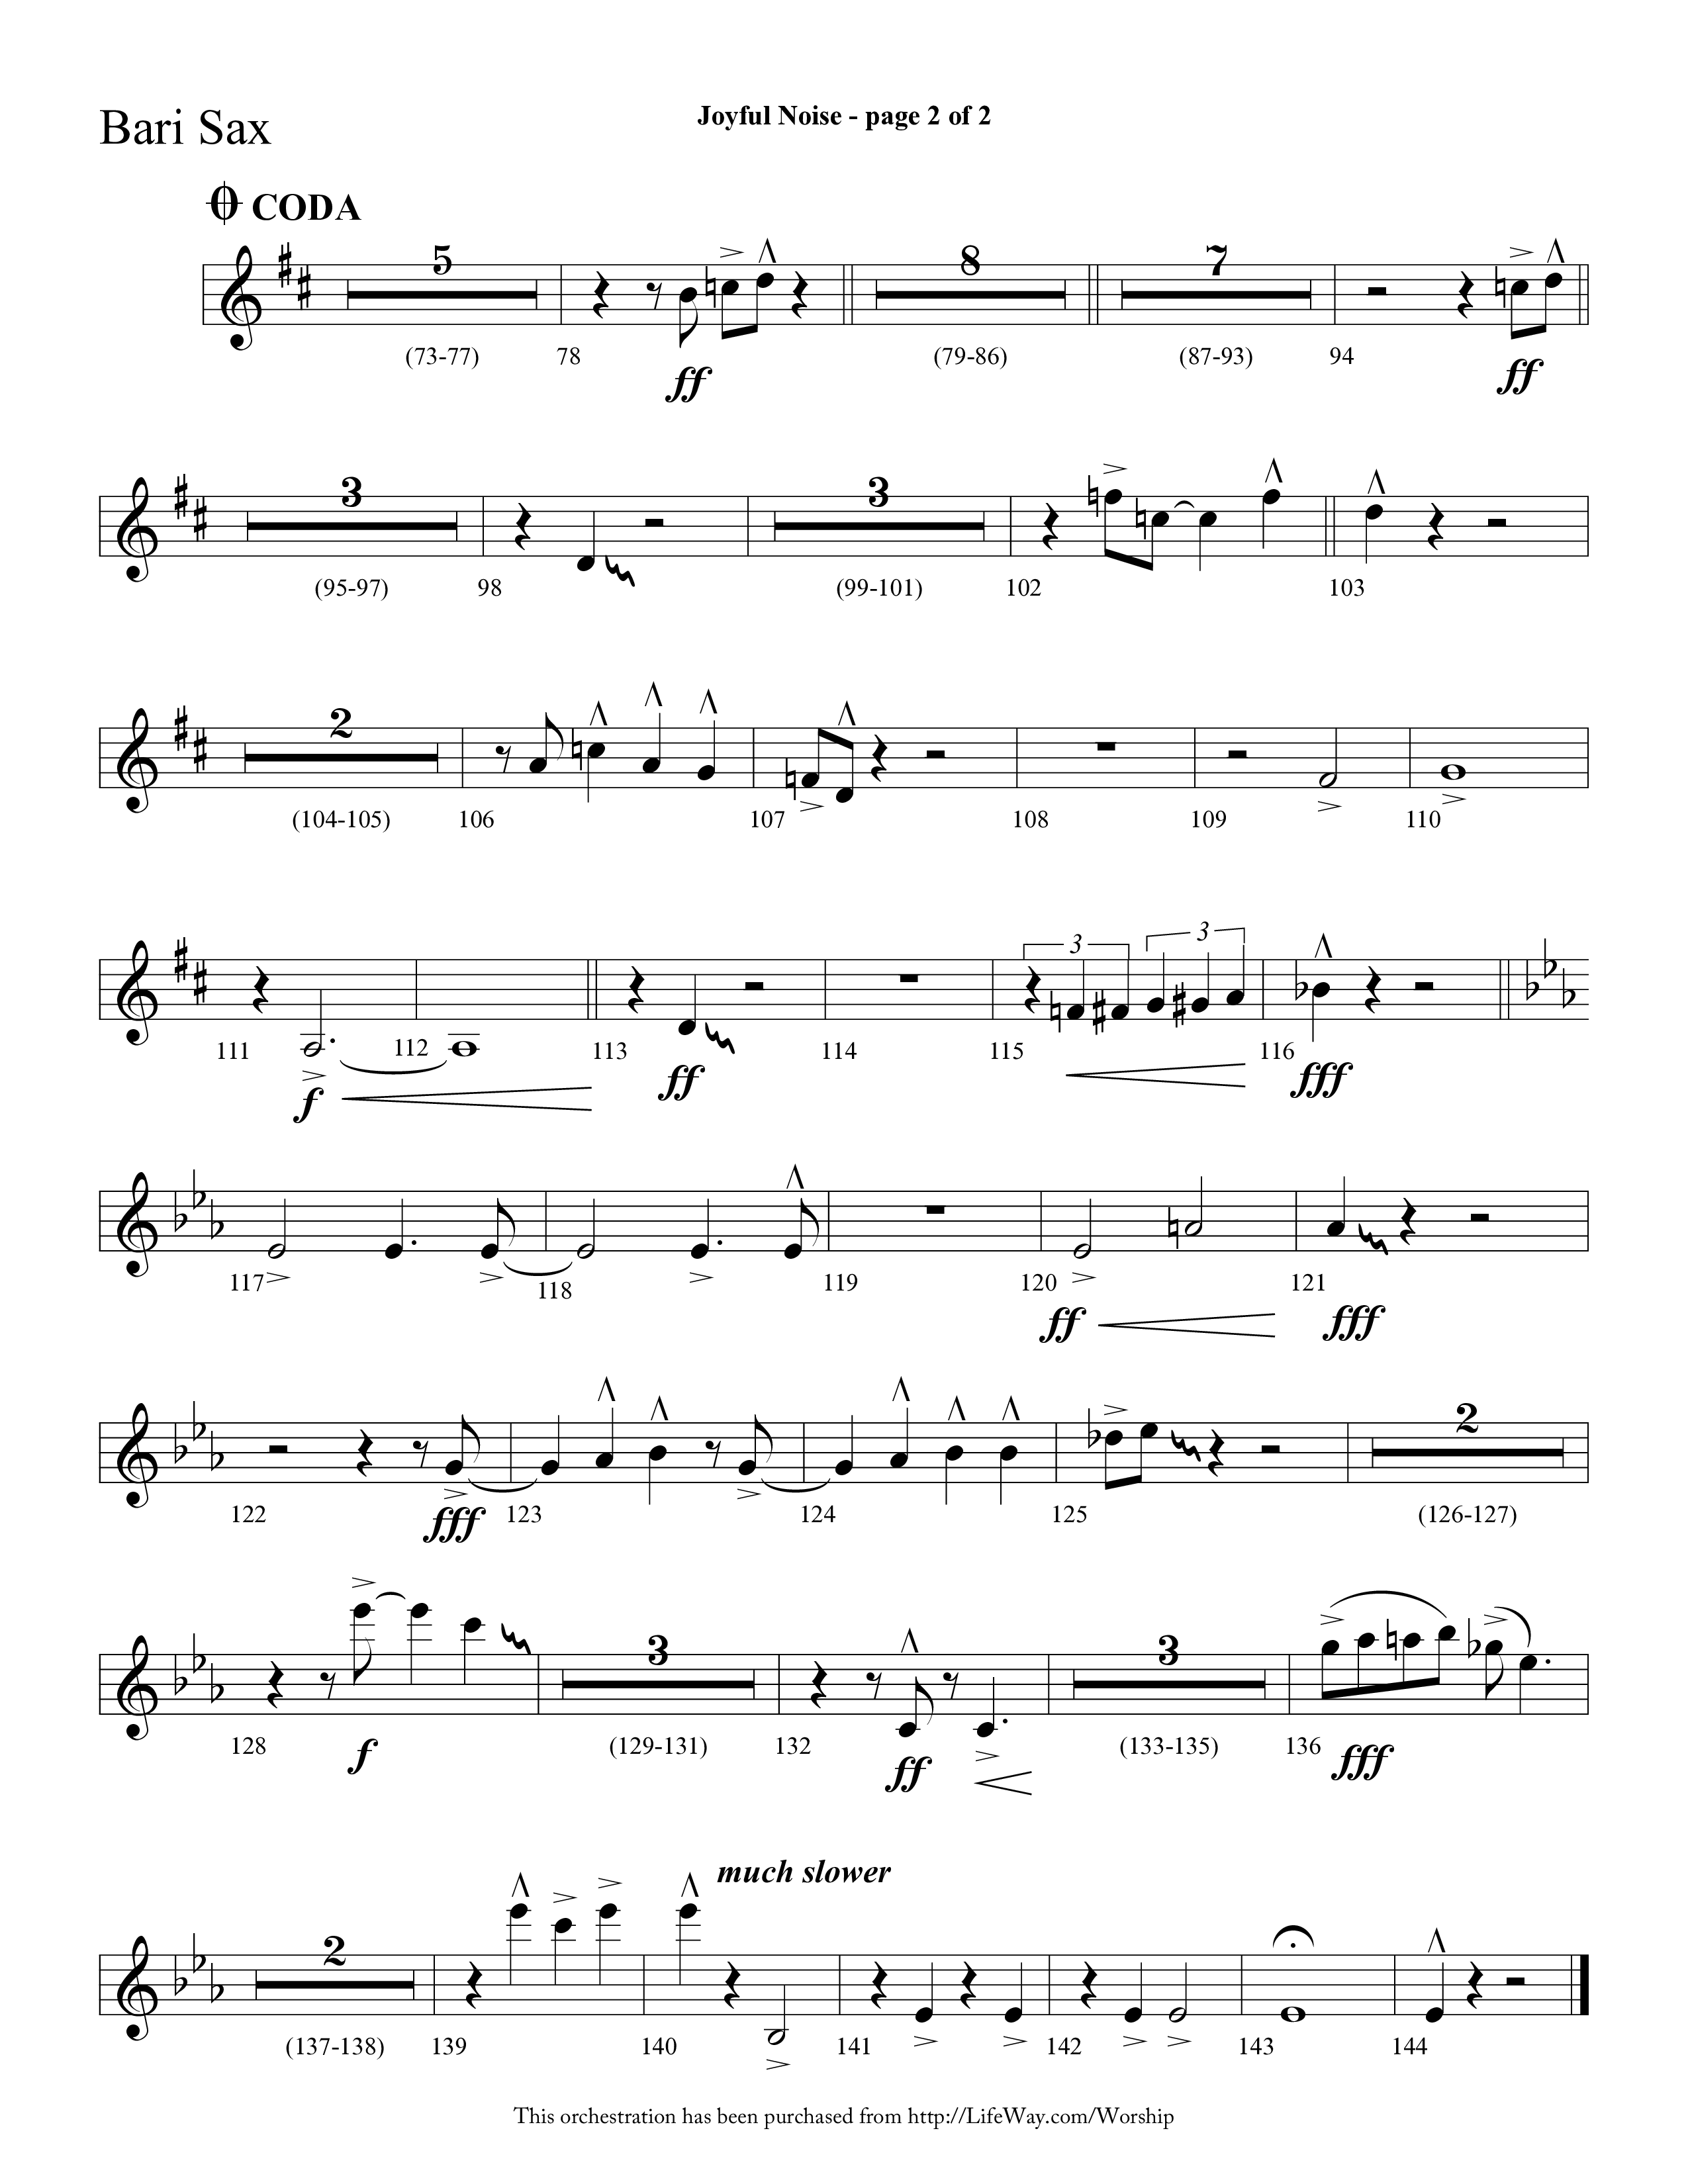 Joyful Noise (Choral Anthem SATB) Bari Sax (Lifeway Choral / Arr. Cliff Duren)